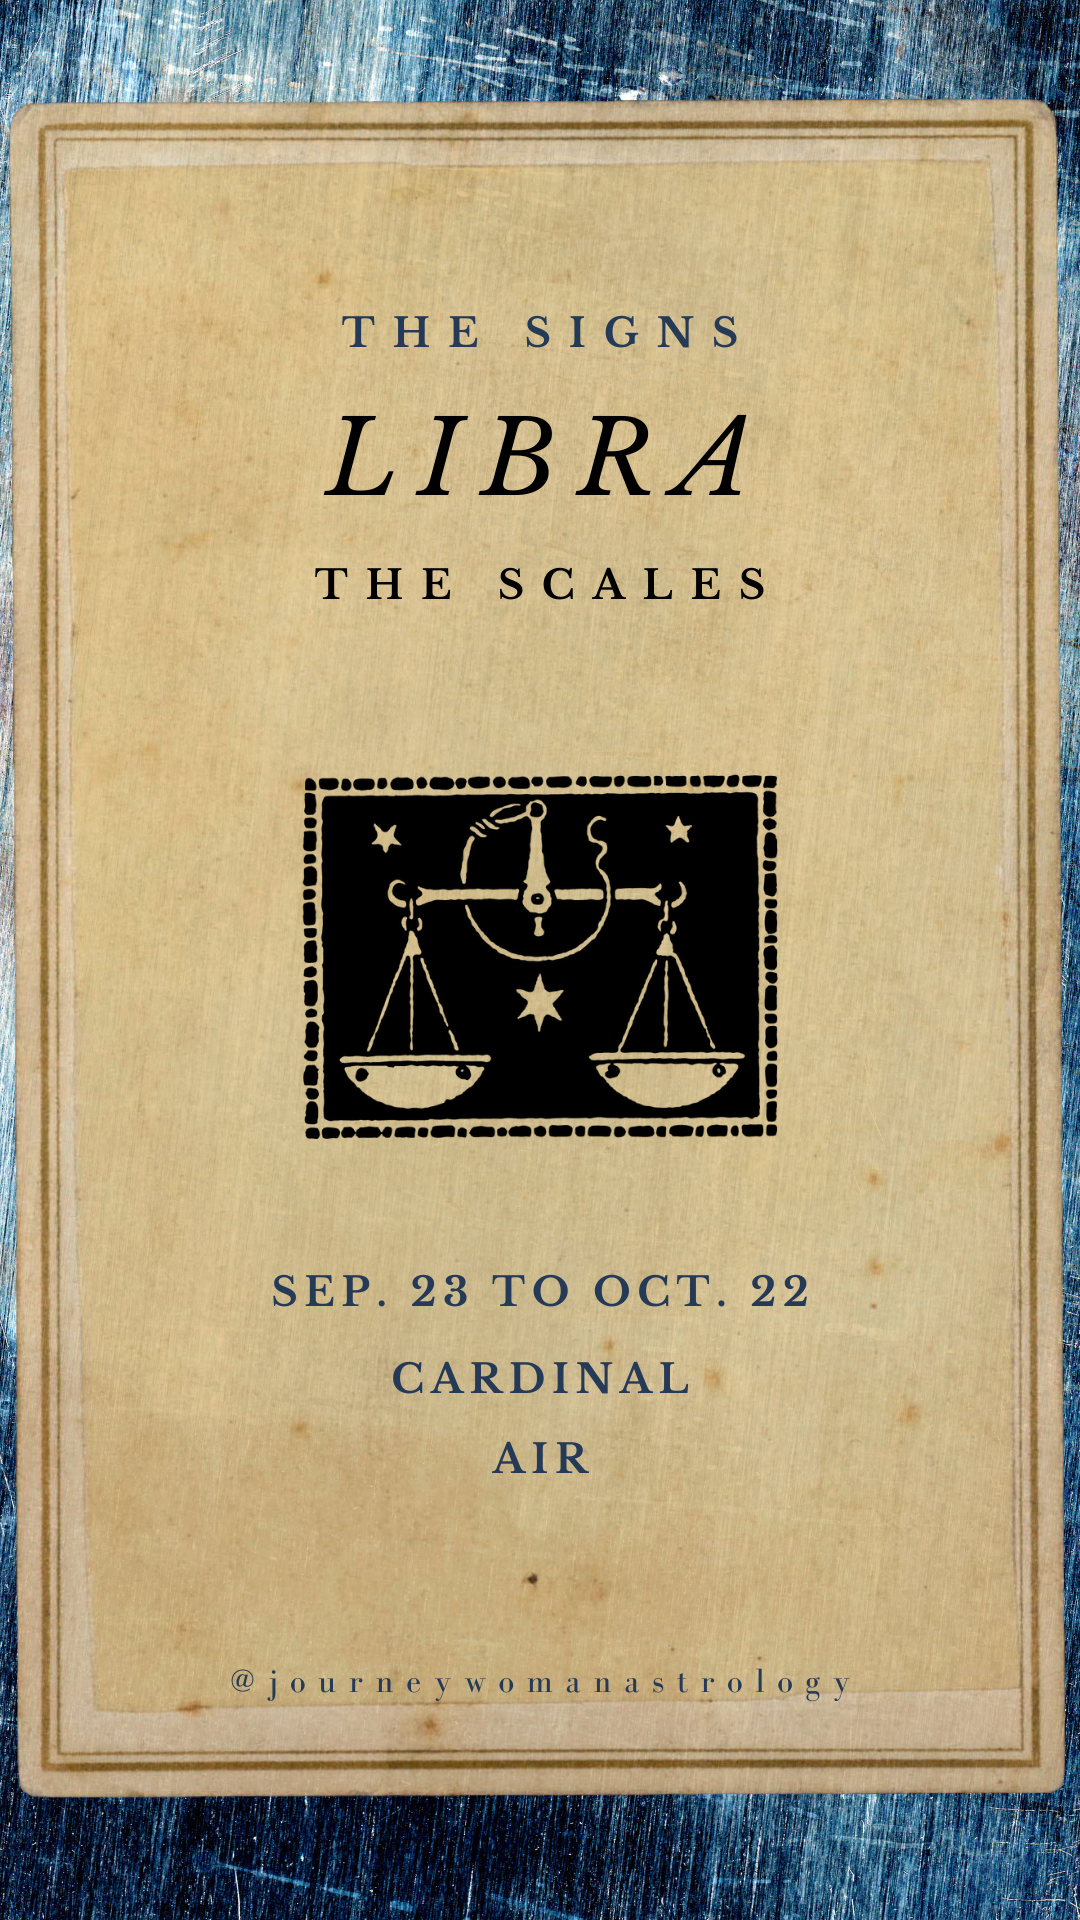 Libra dates, mode, element, symbol